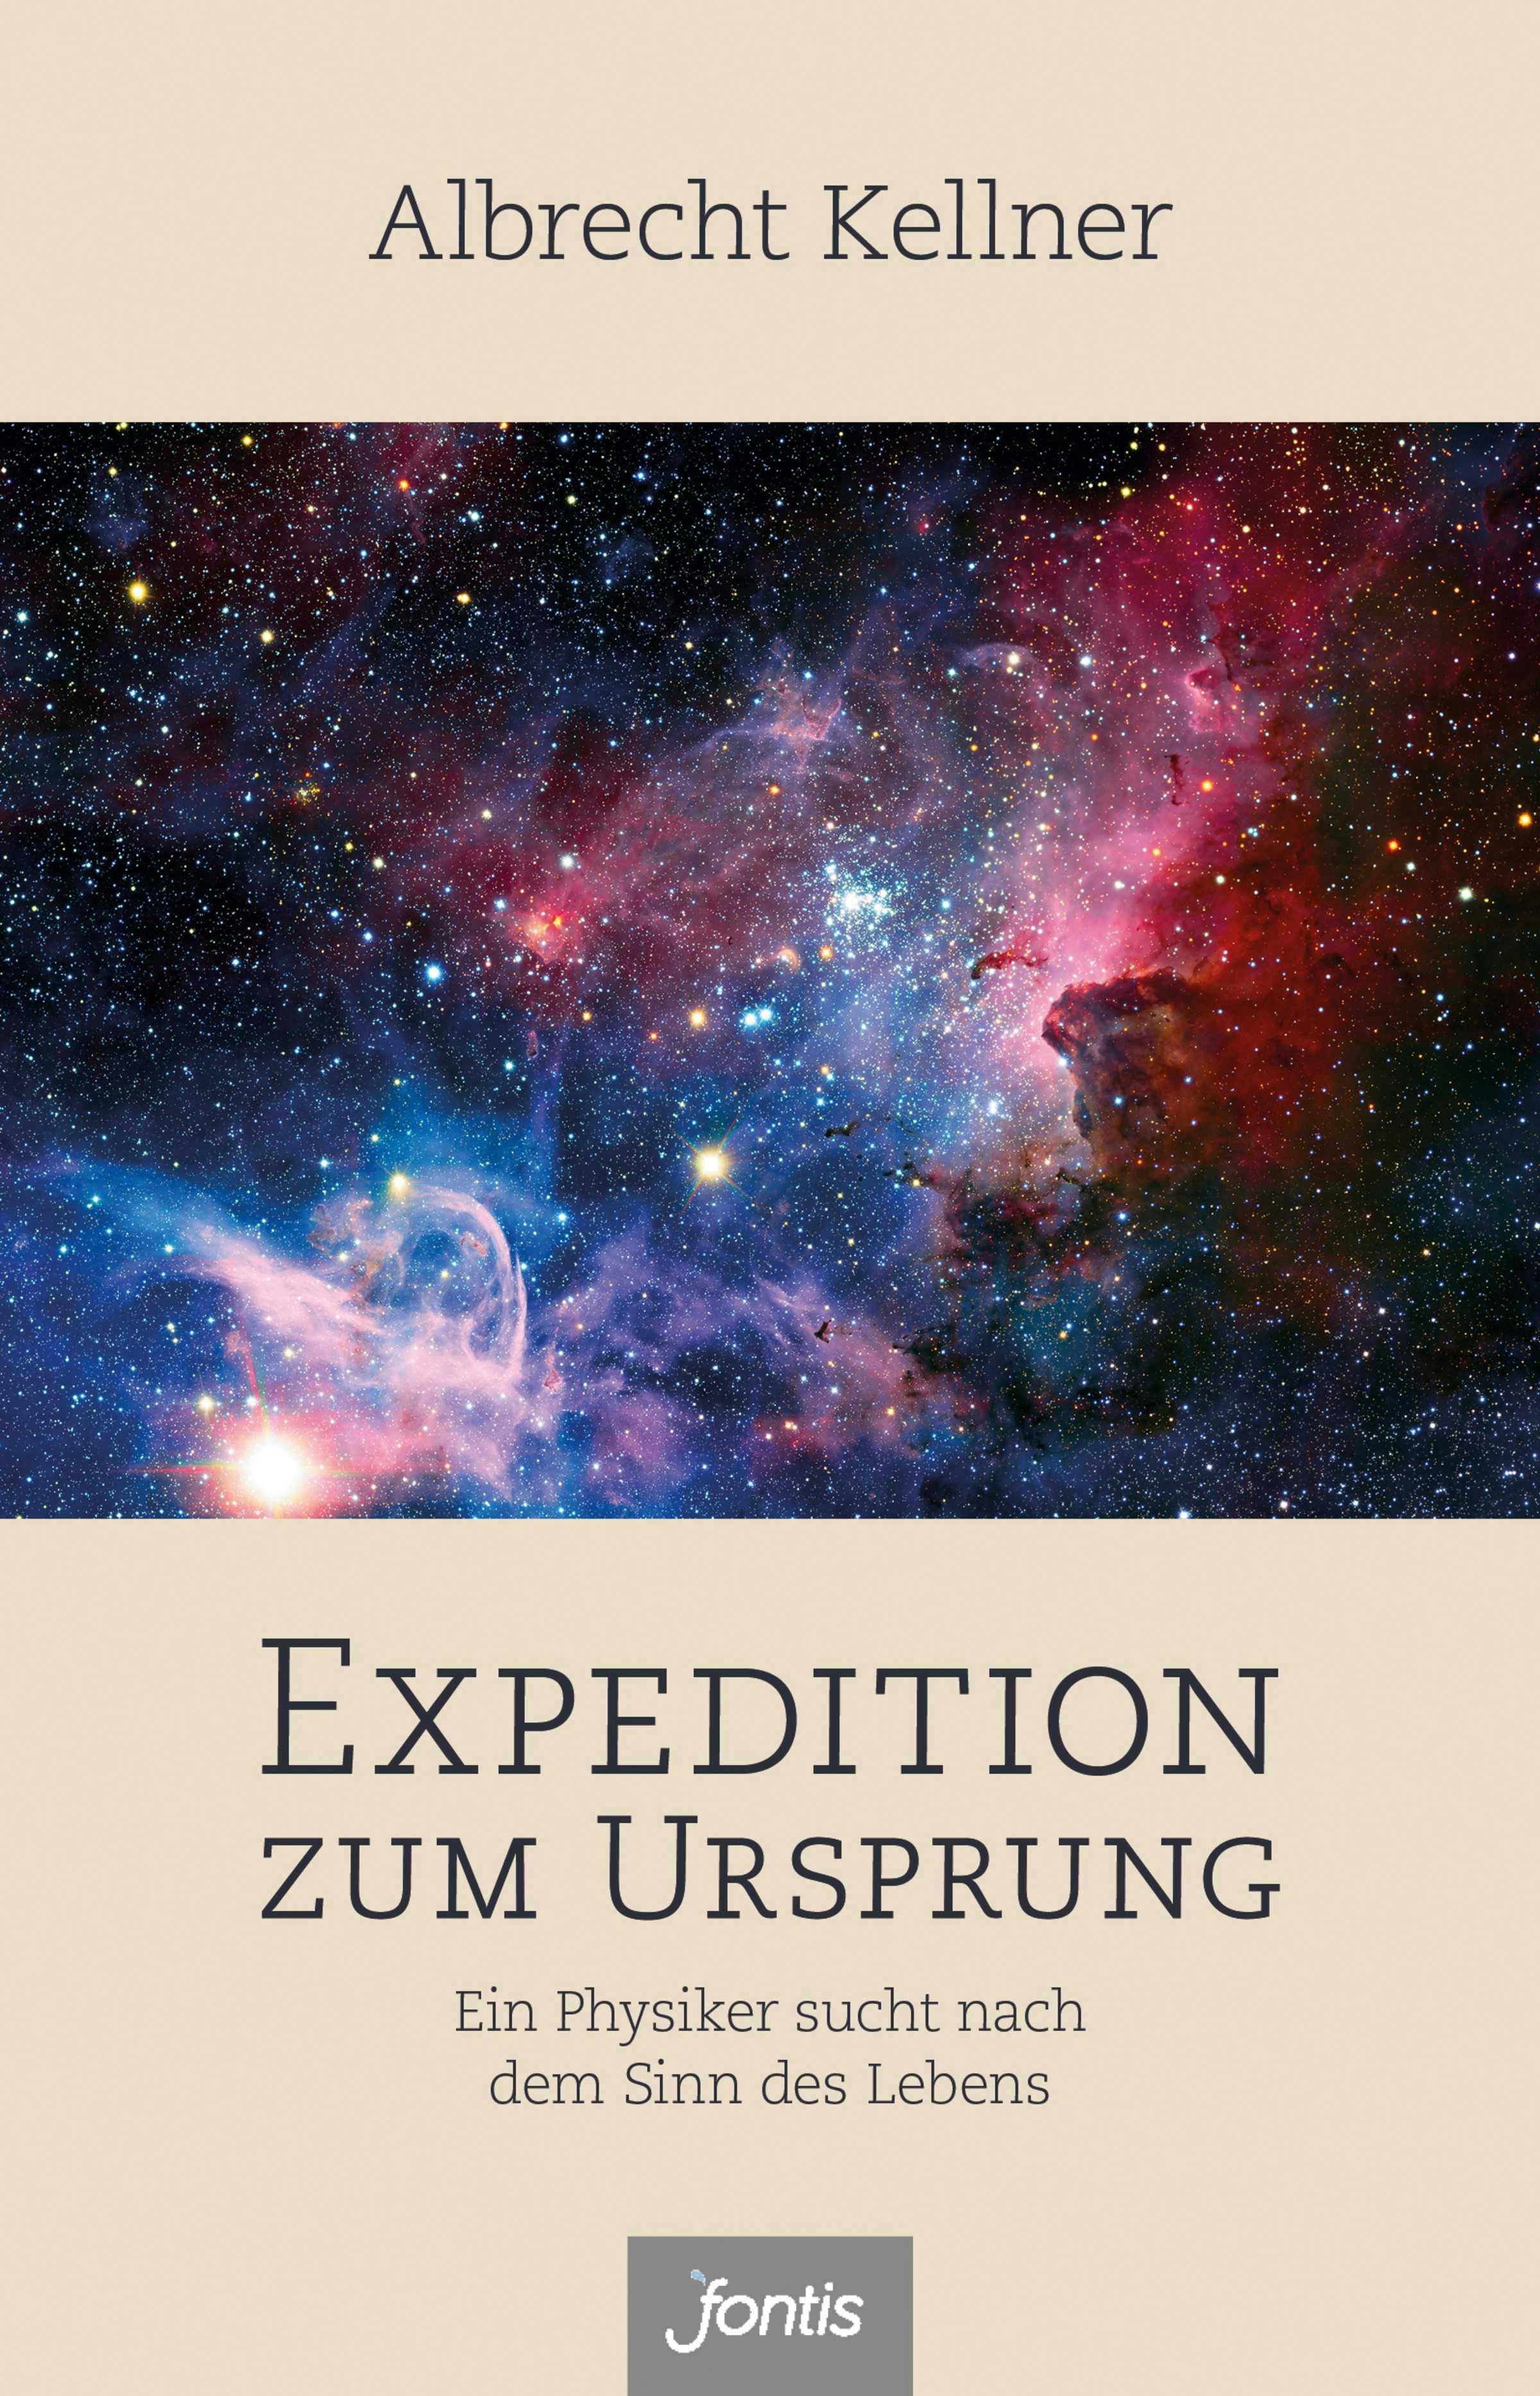 Expedition zum Ursprung - Albrecht Kellner